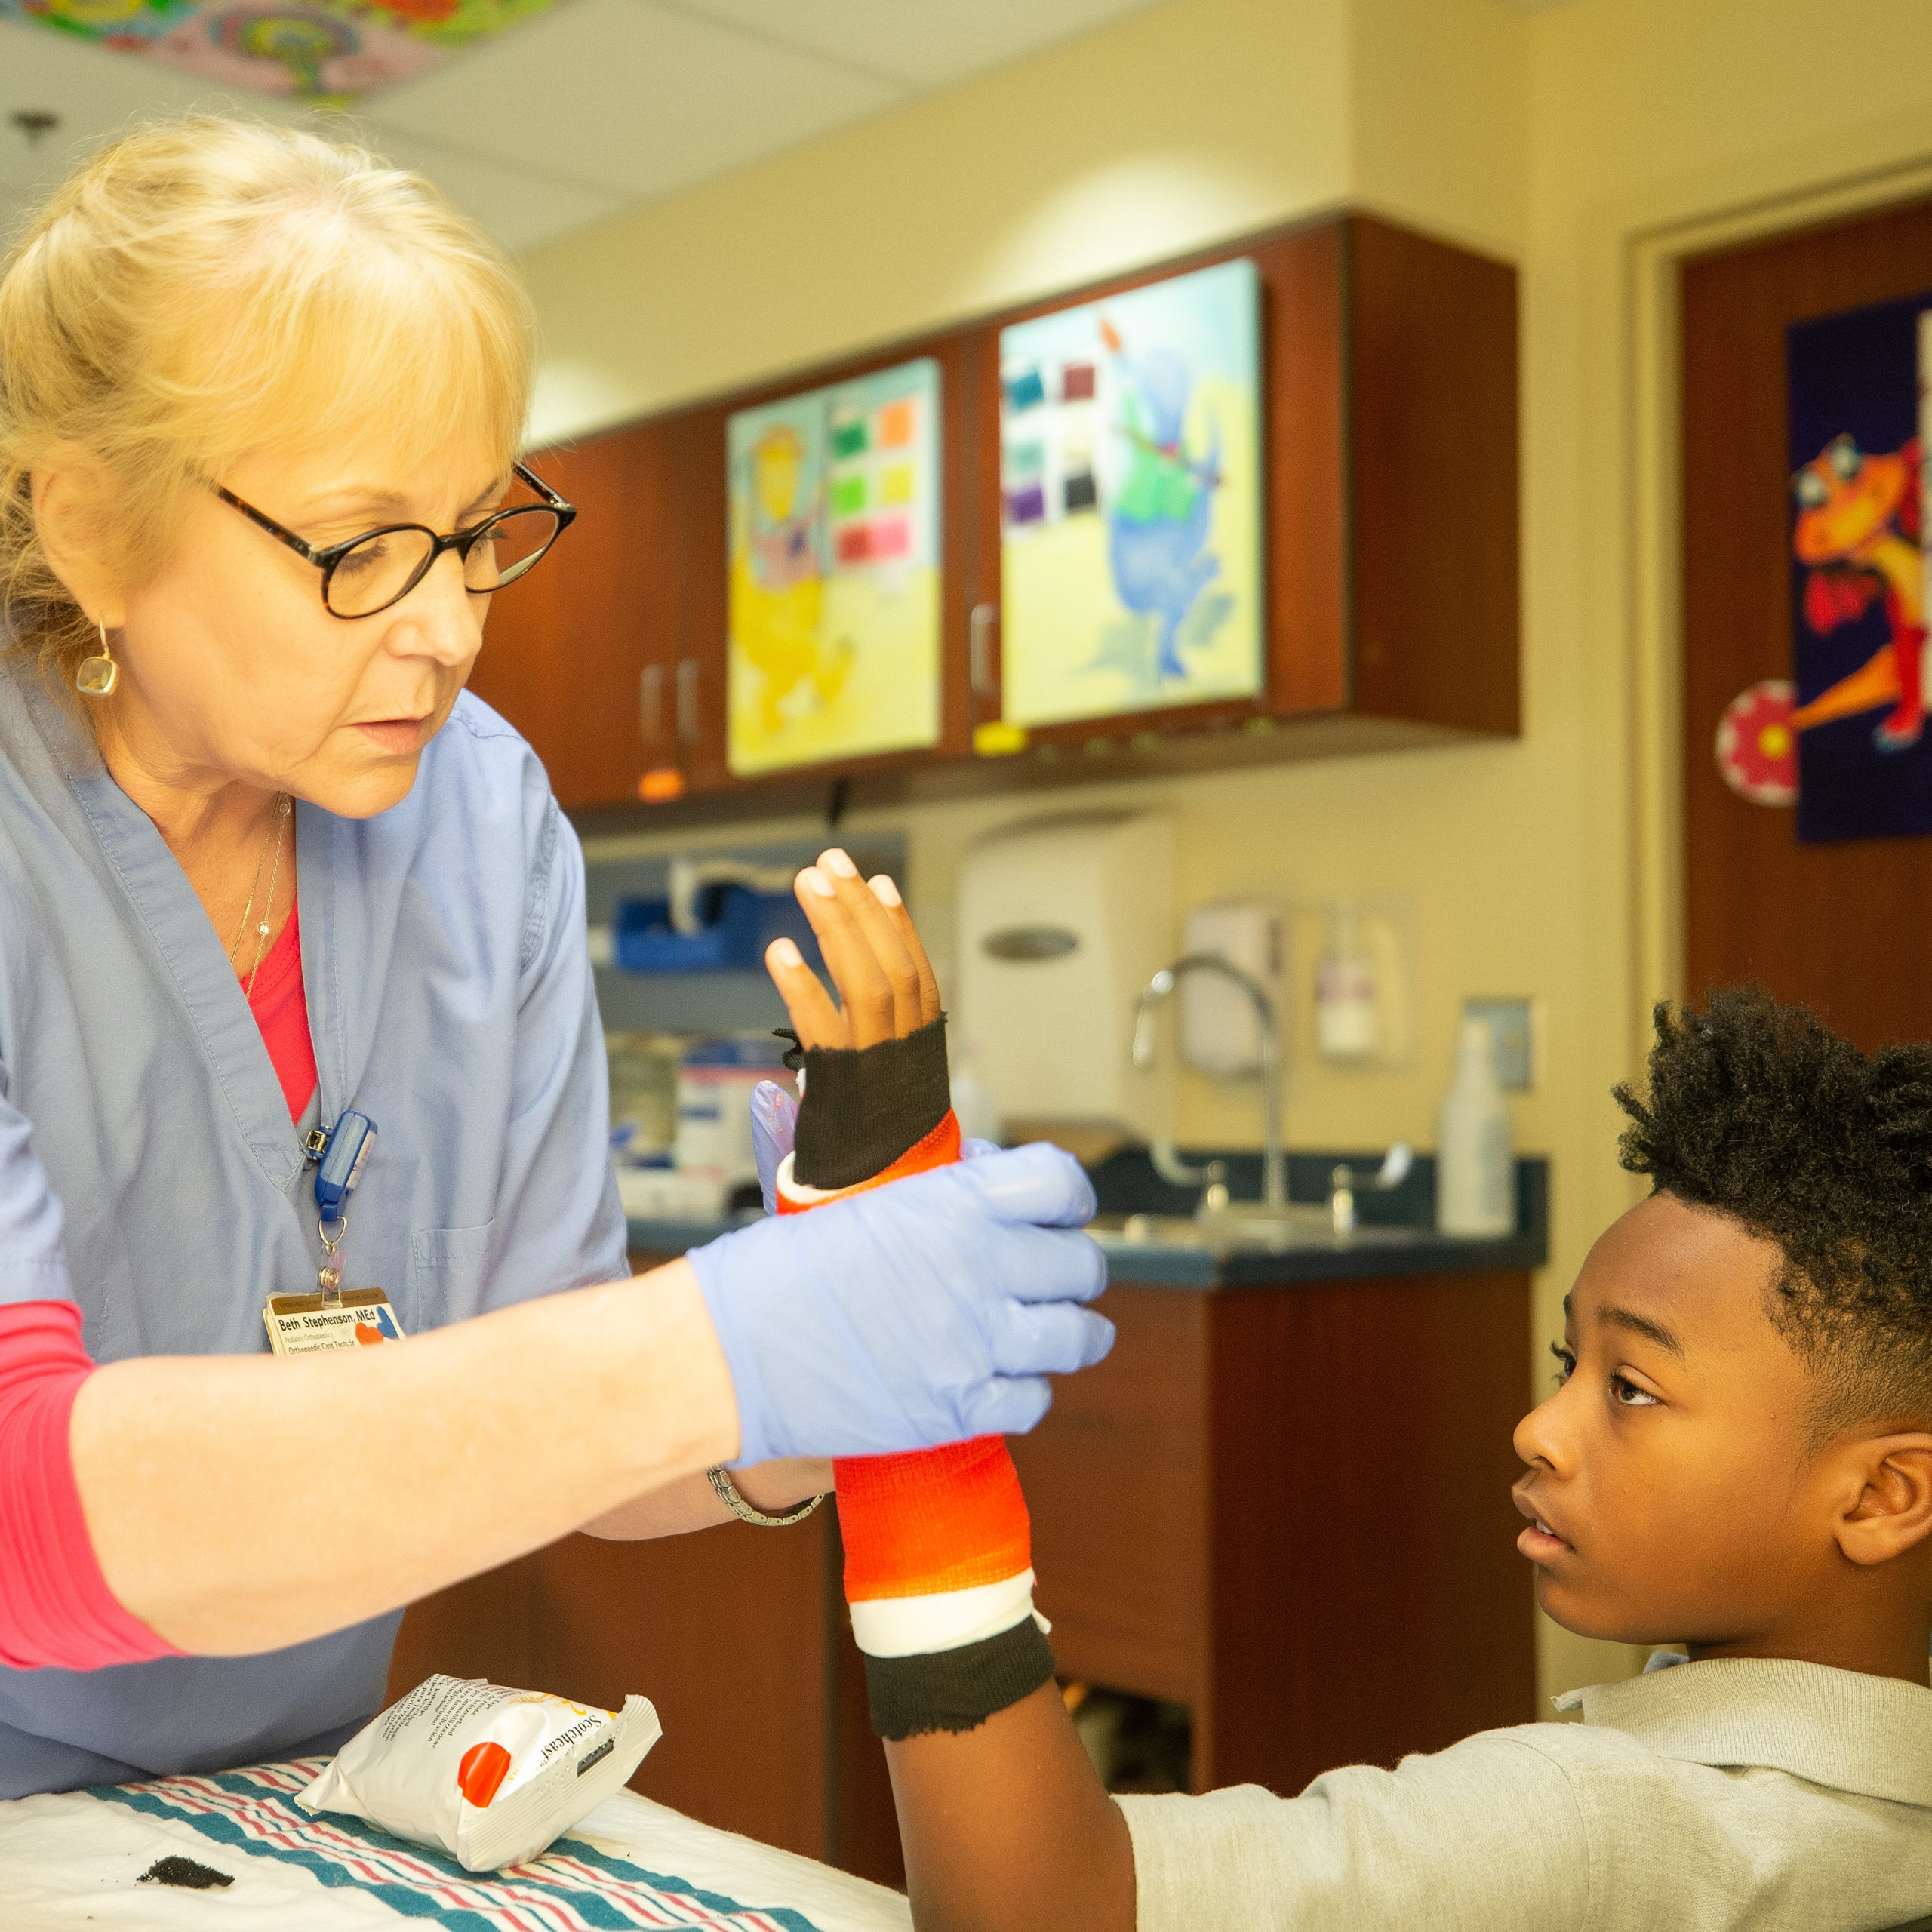 A nurse casts a boy's left arm